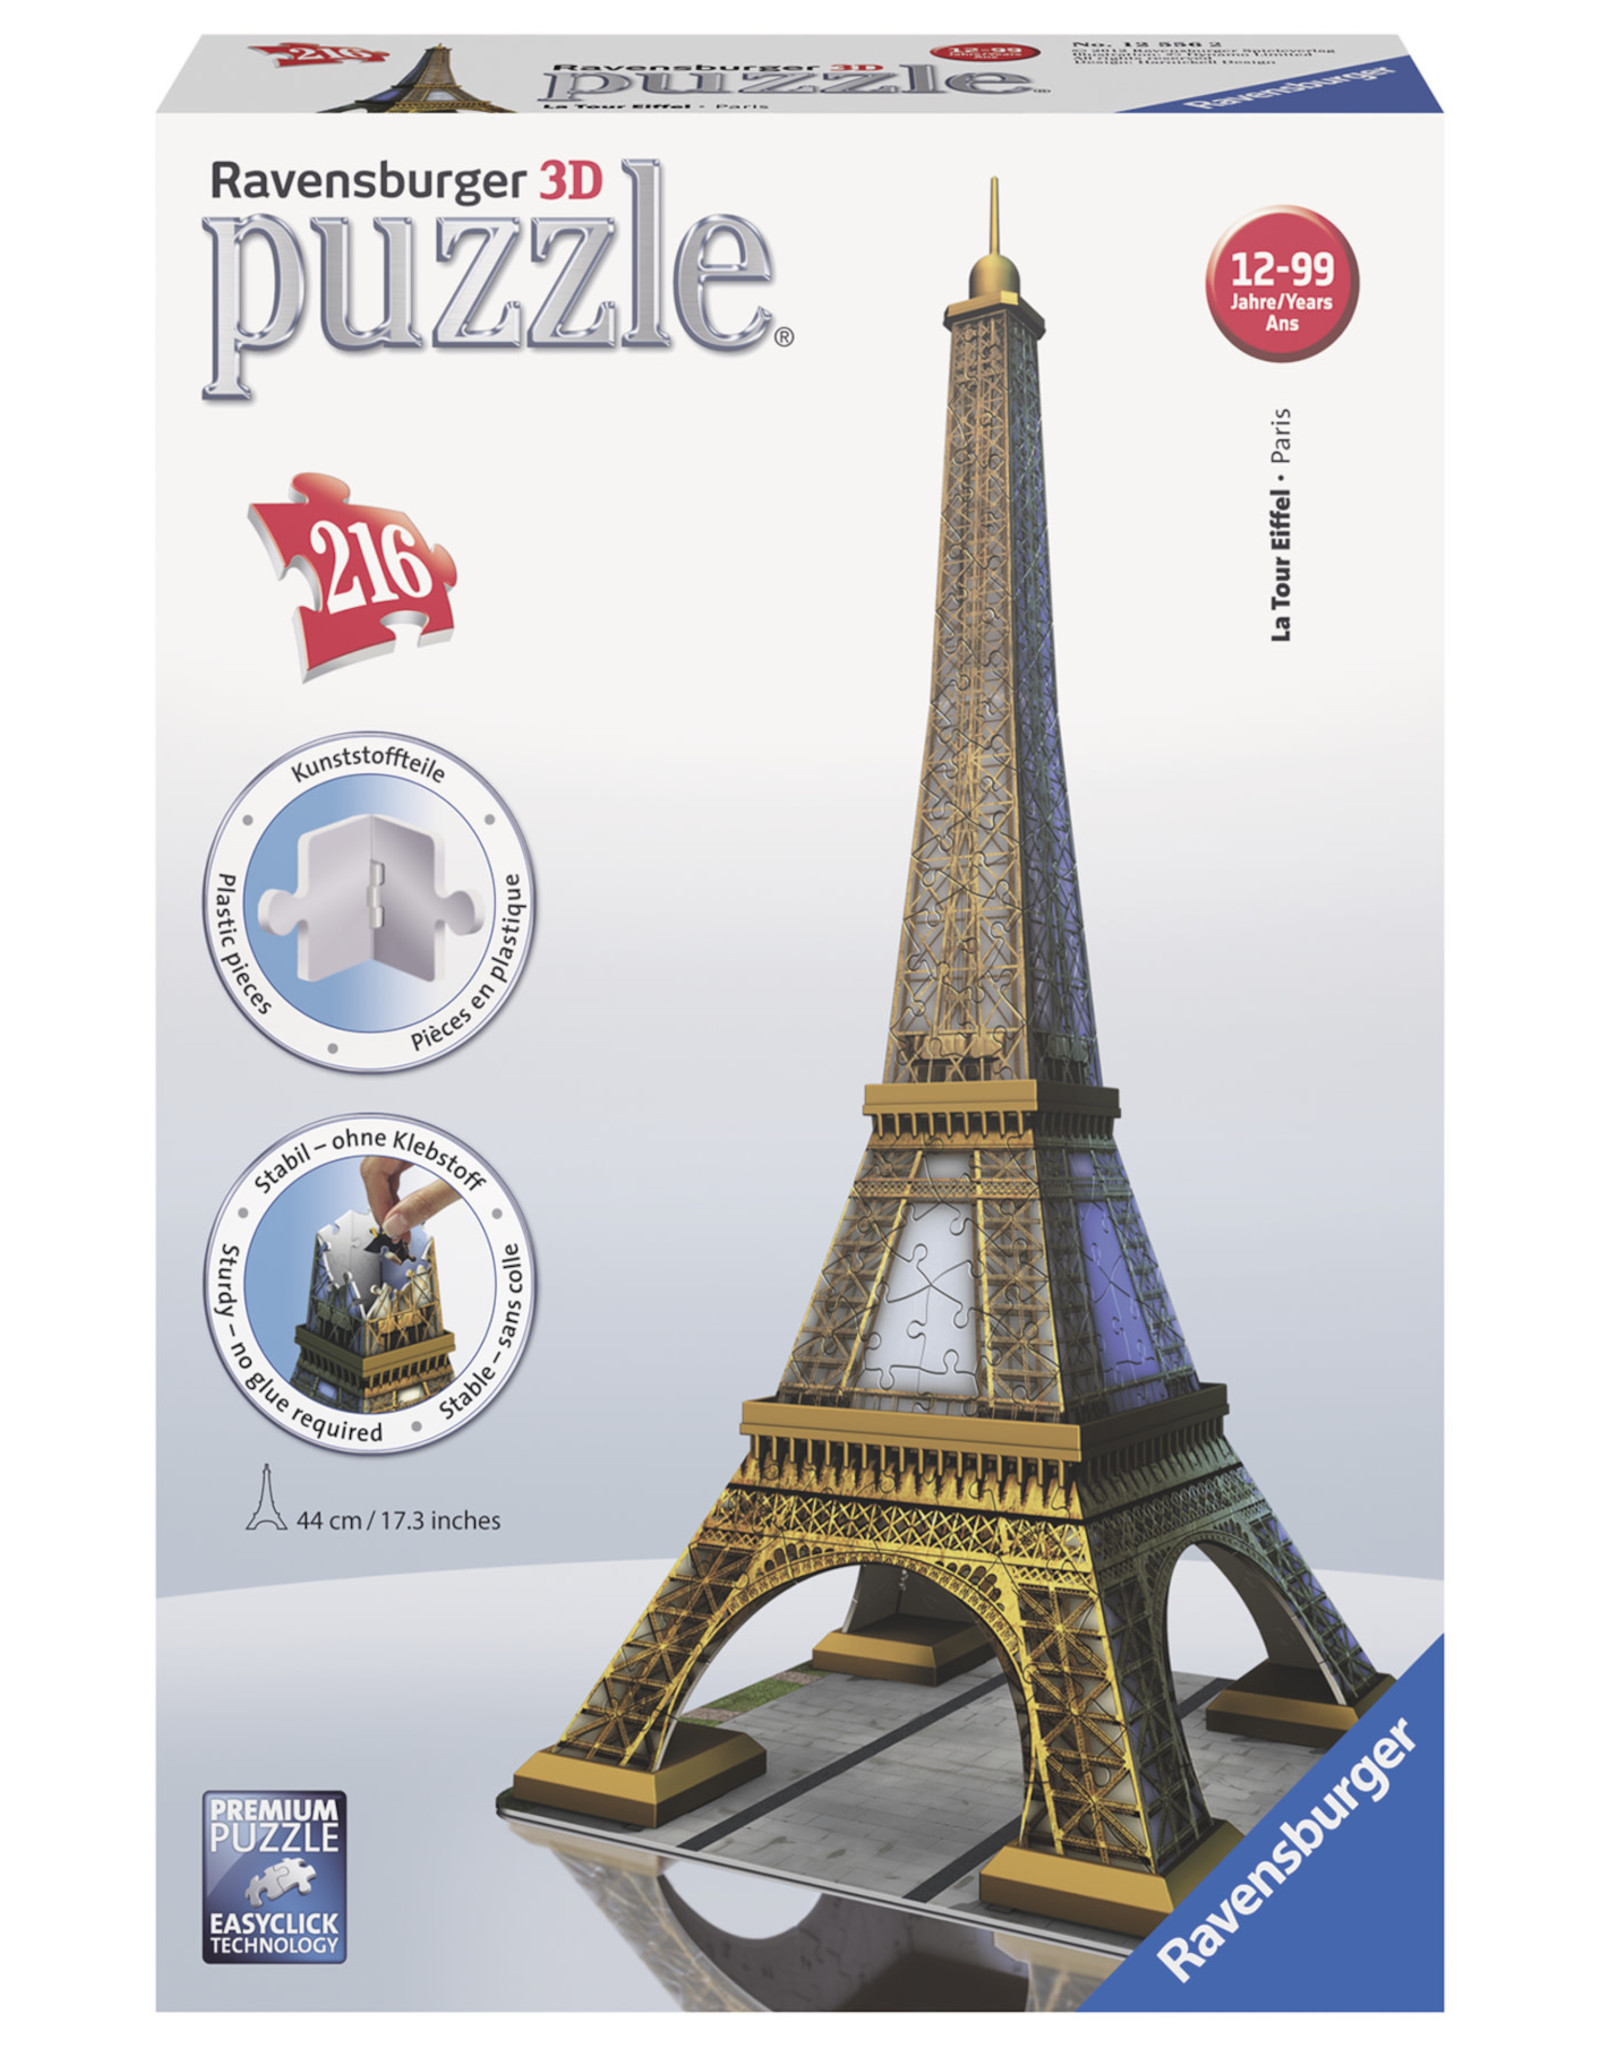 Ravensburger Ravensburger 3D Puzzel 125562 Eiffeltoren - 216 Stukjes